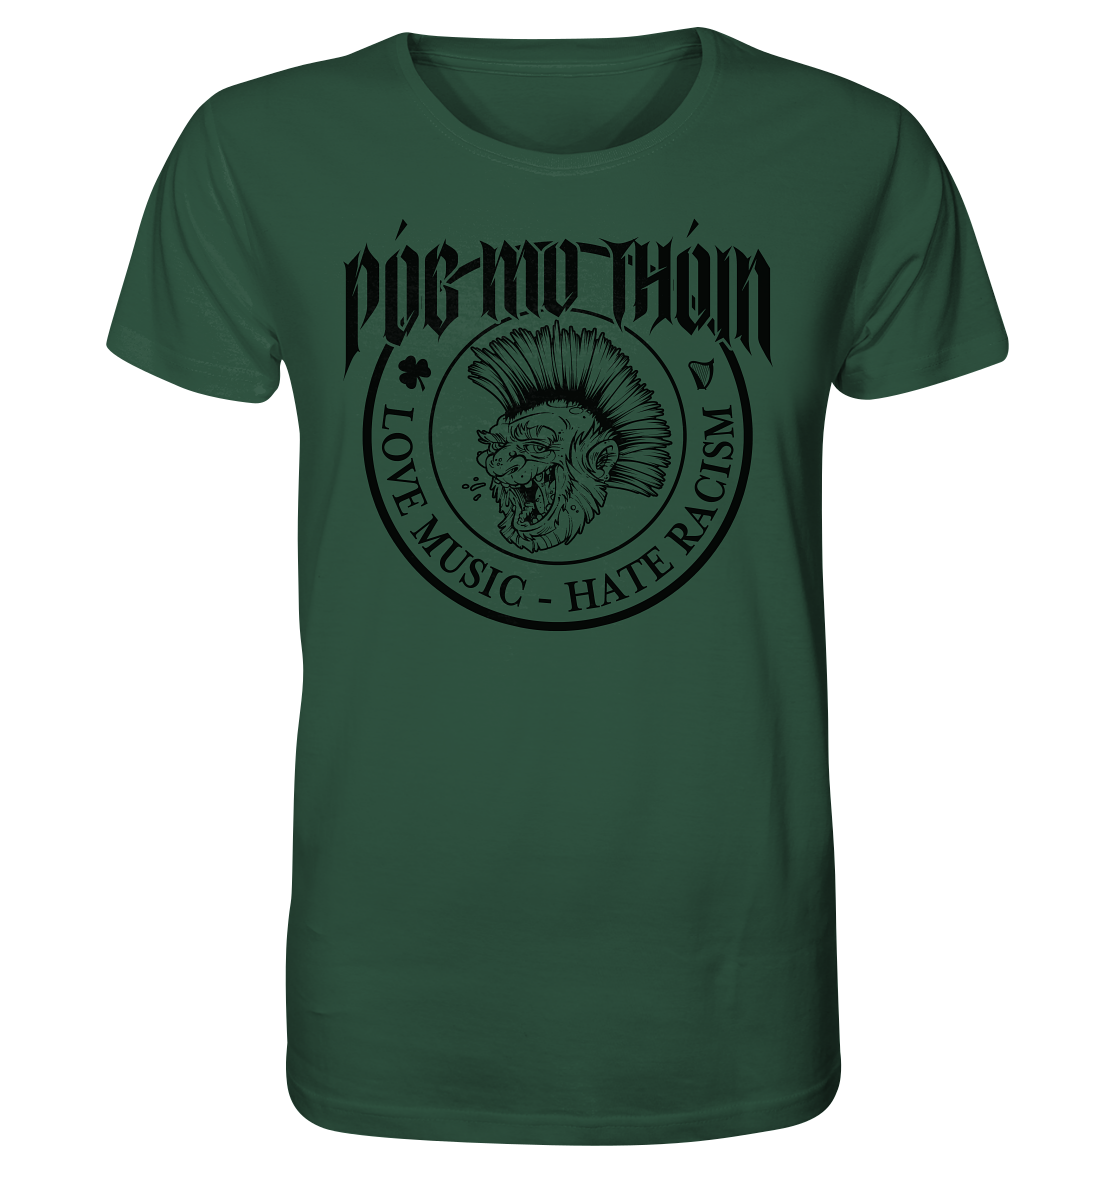 Póg Mo Thóin Streetwear "Love Music - Hate Racism" - Organic Shirt